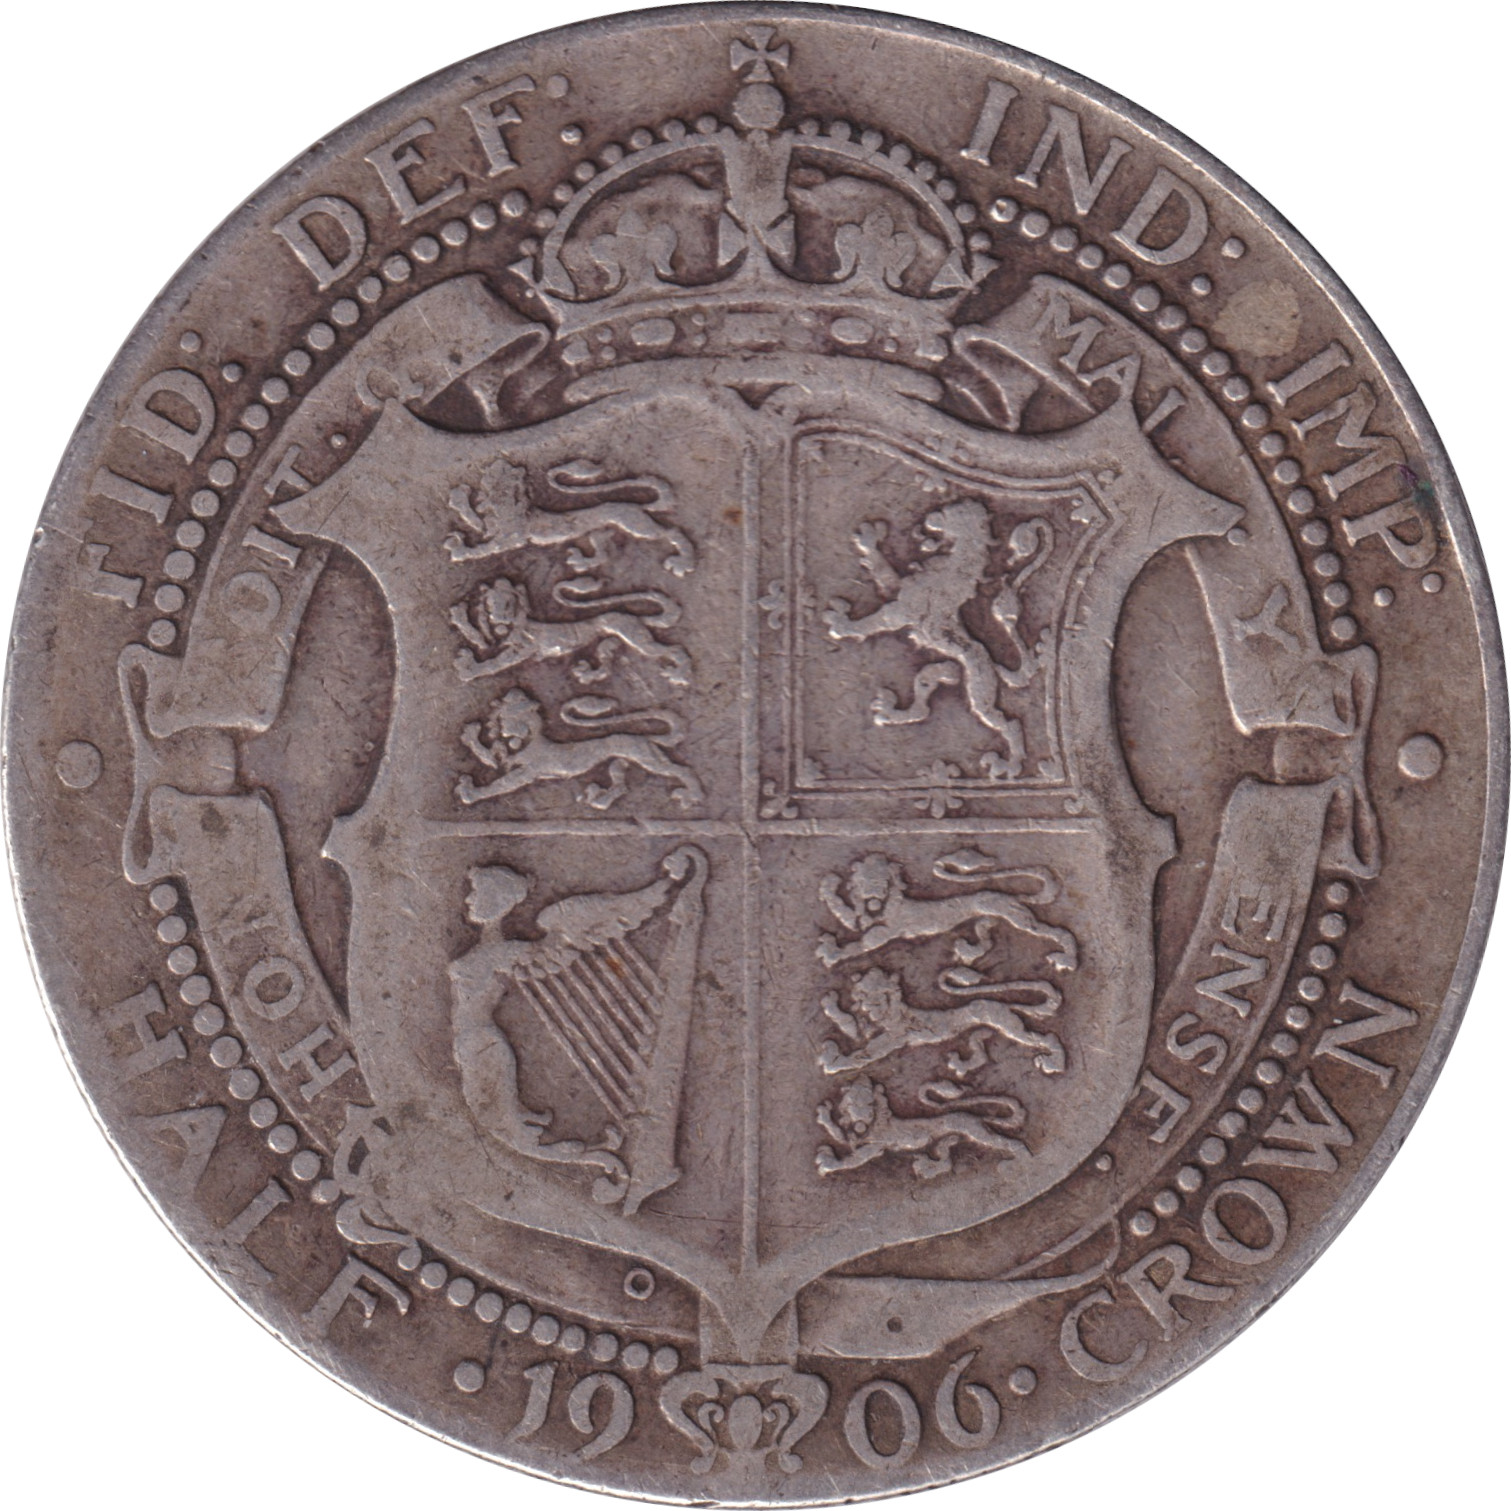 1/2 crown - Edouard VII